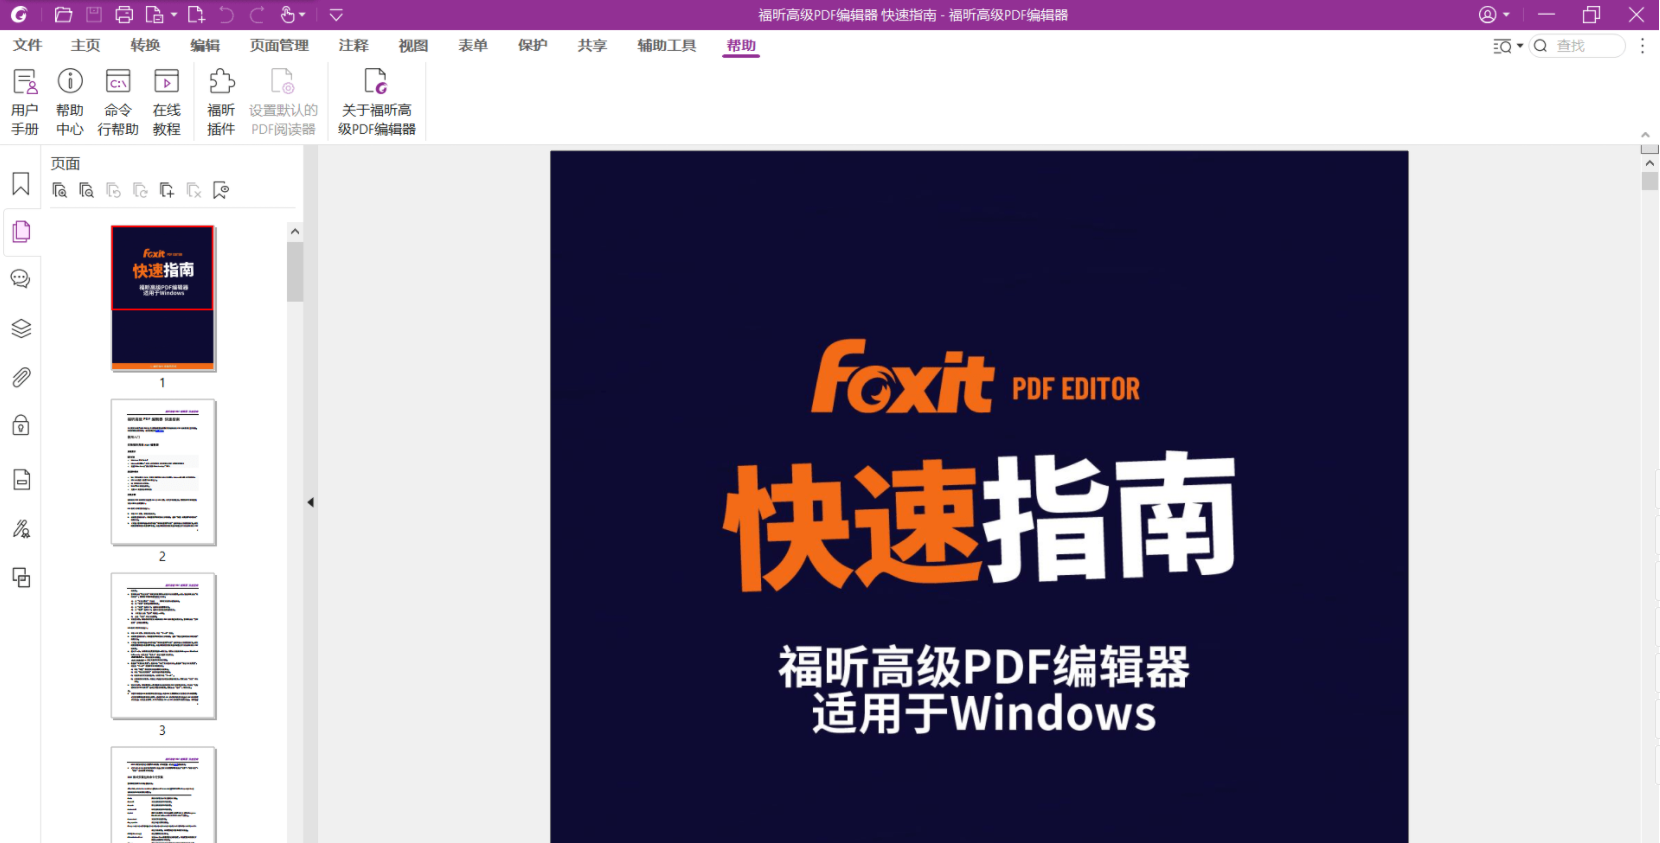 [Windows] 福昕高级PDF编辑器专业版 Foxit PDF Editor Pro v12.0.1.12430